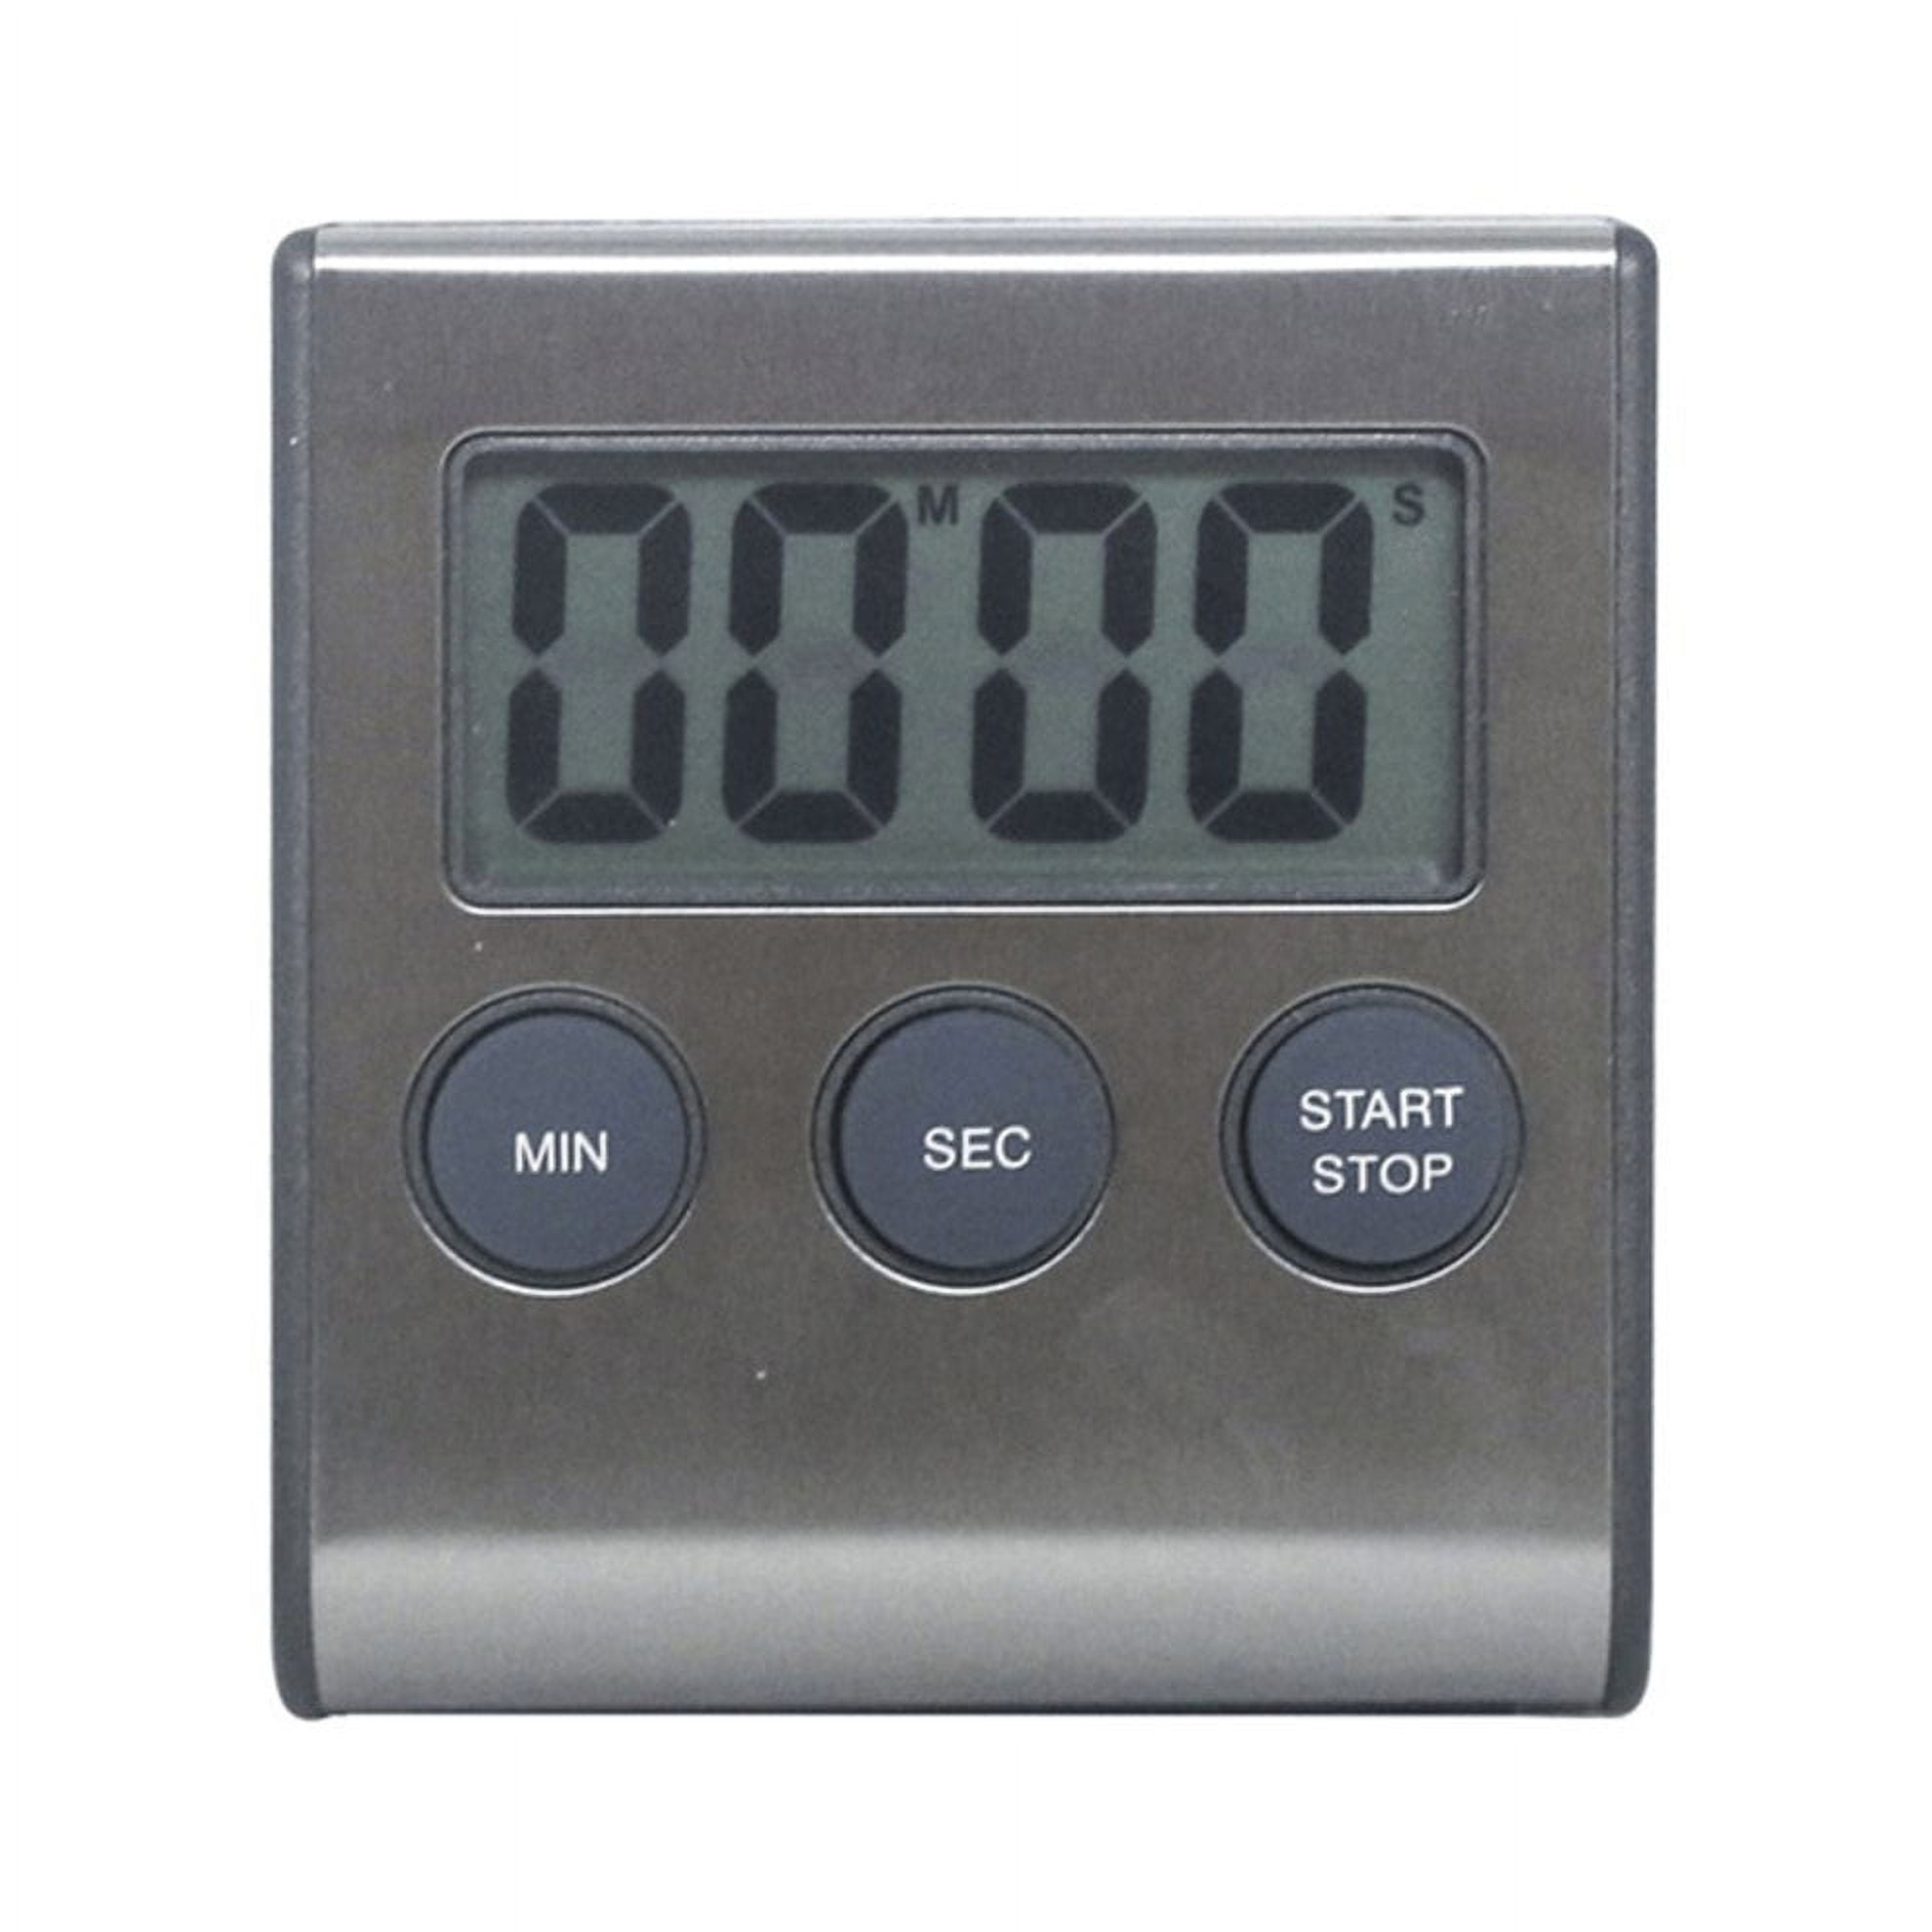 Polder 898-90 Timer, Clock, & Stopwatch, White 